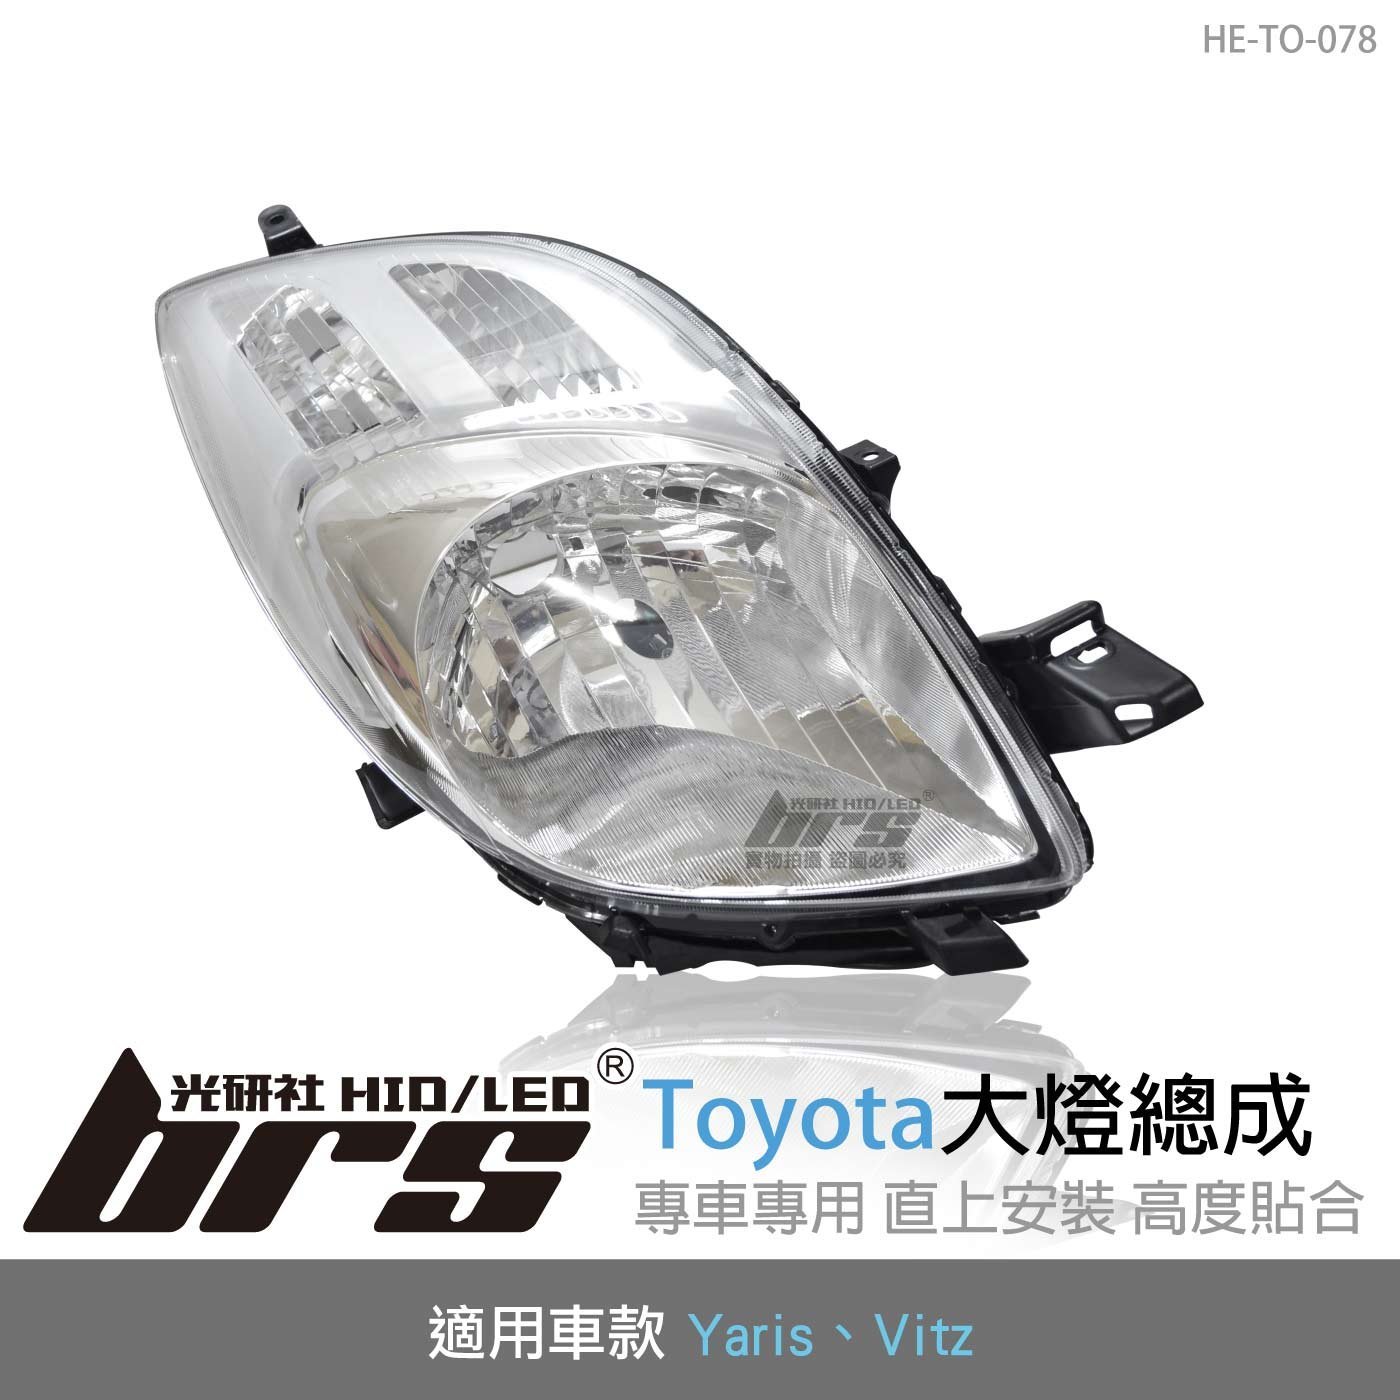 【brs光研社】HE-TO-078 Yaris Vitz 大燈總成 Toyota 豐田 原廠型 銀底款 DEPO製